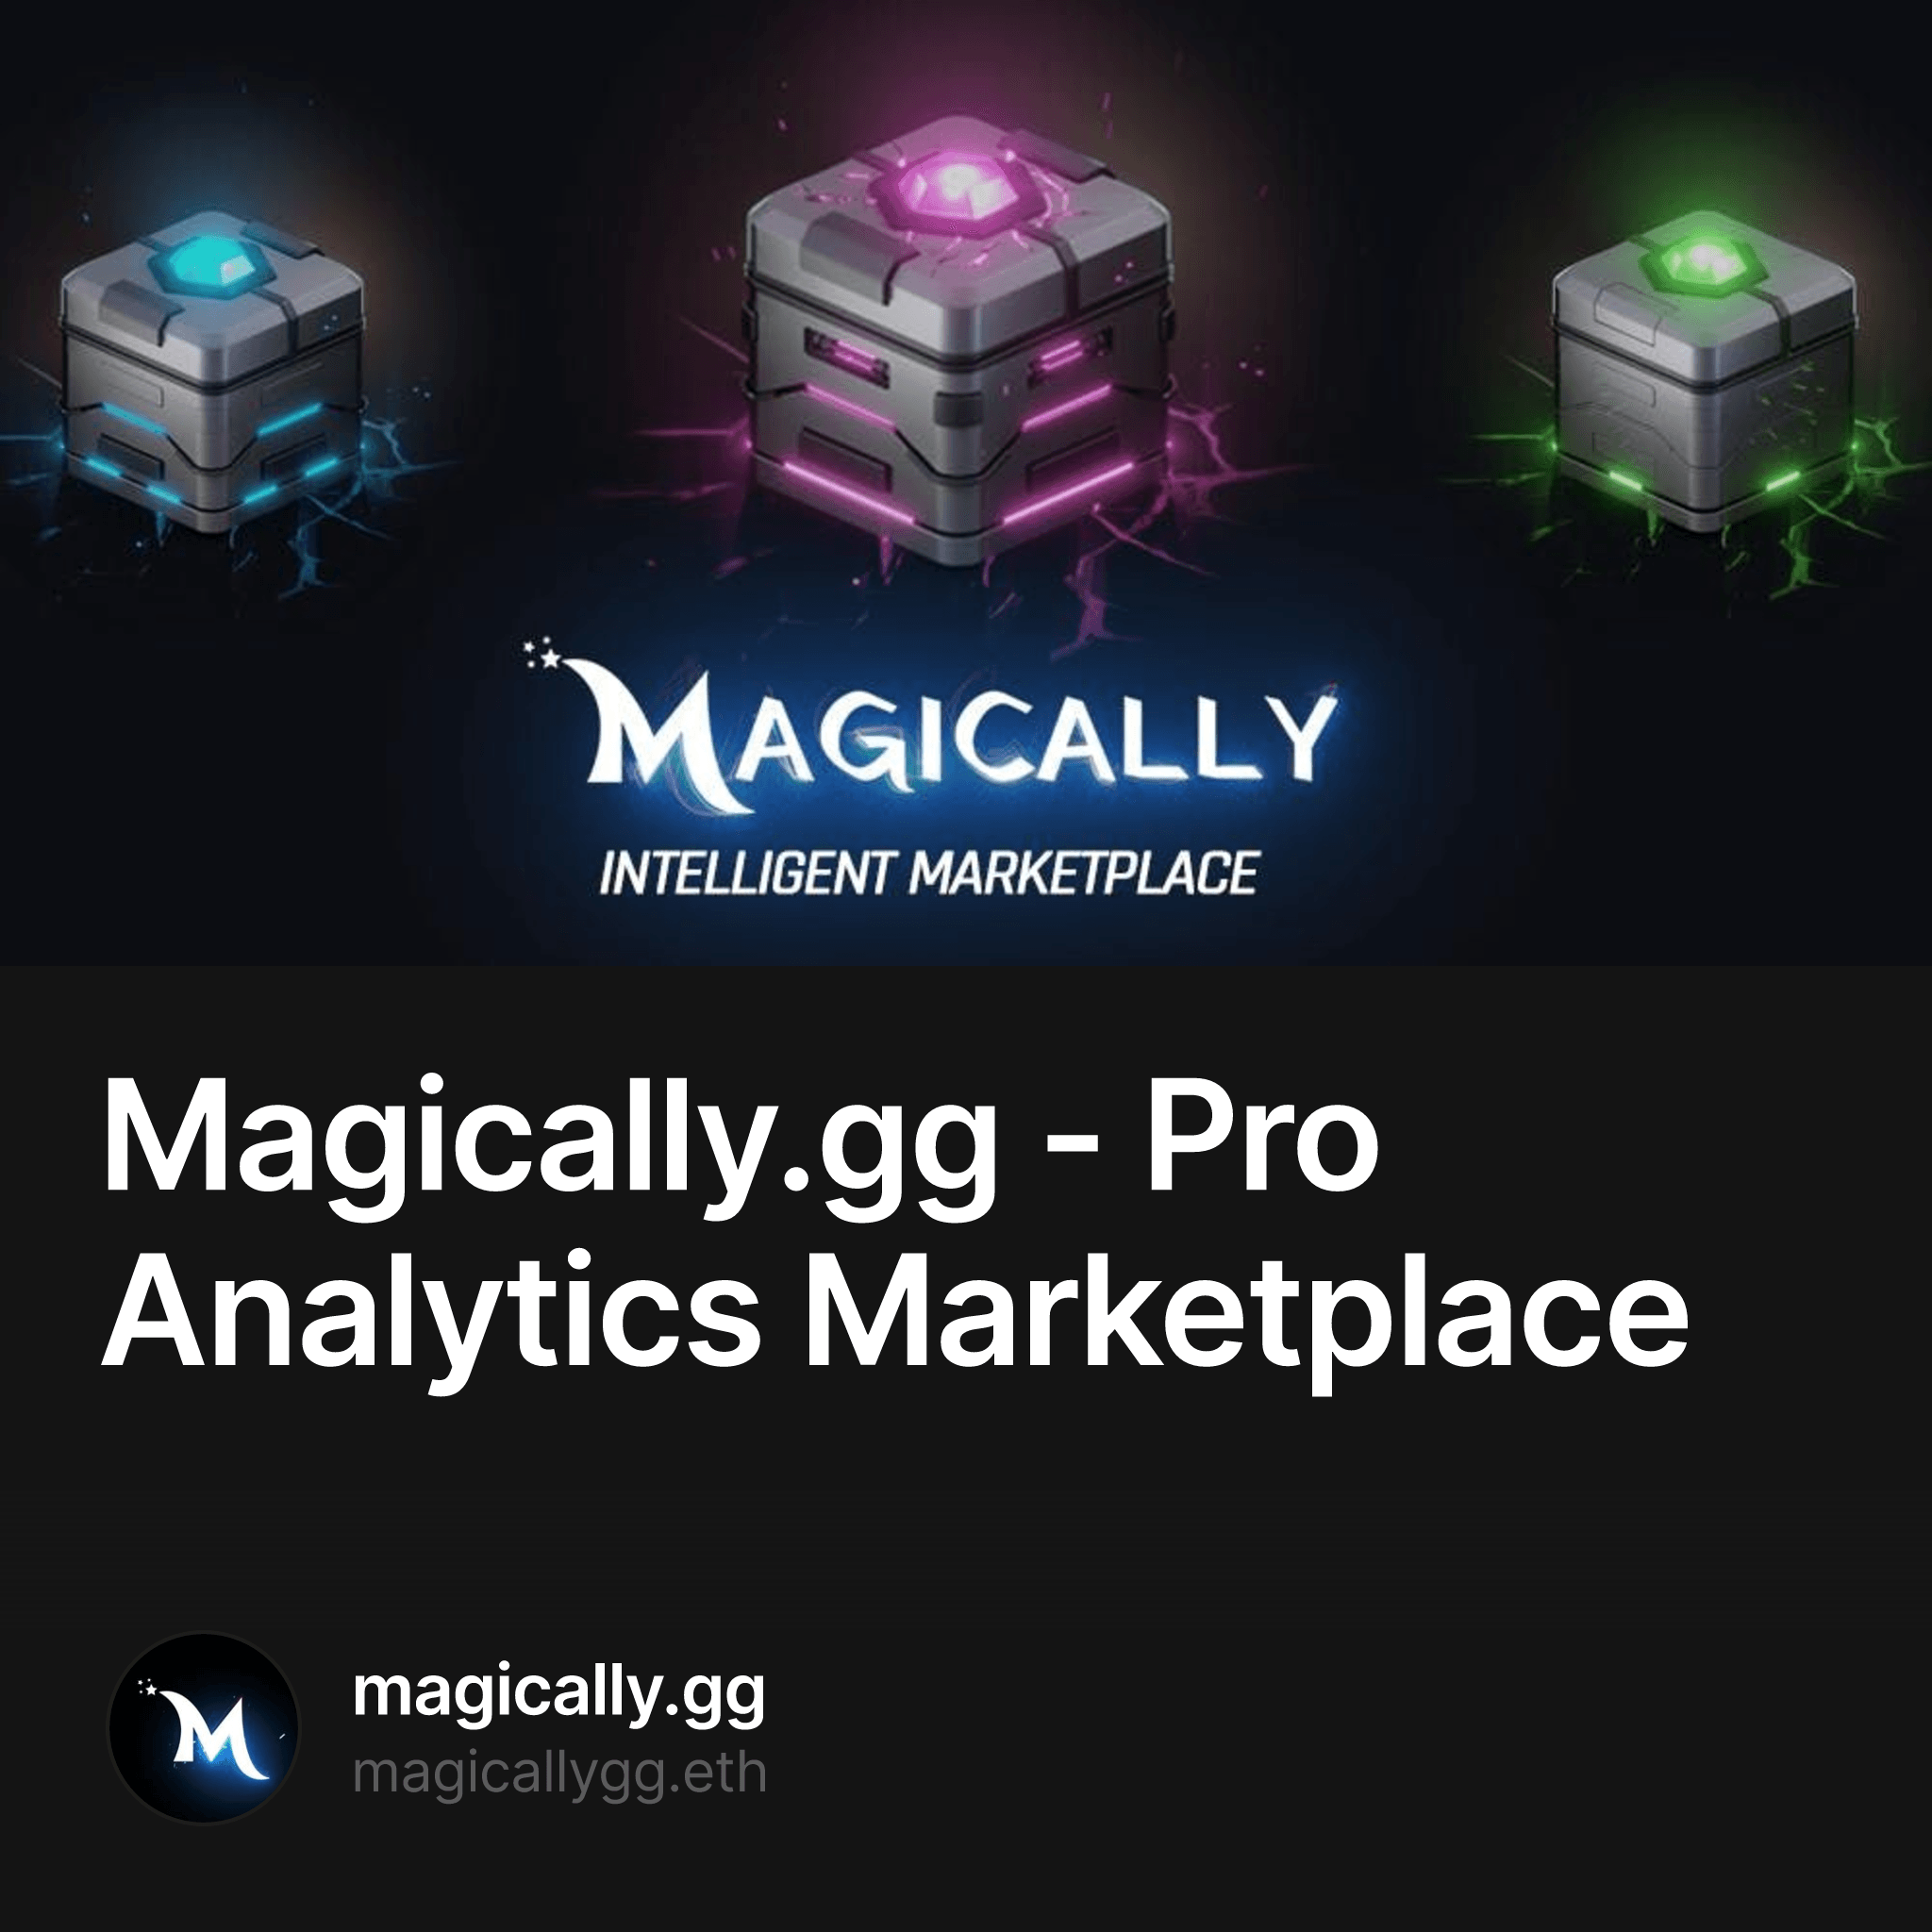 Magically.gg - Pro Analytics Marketplace 513/1000